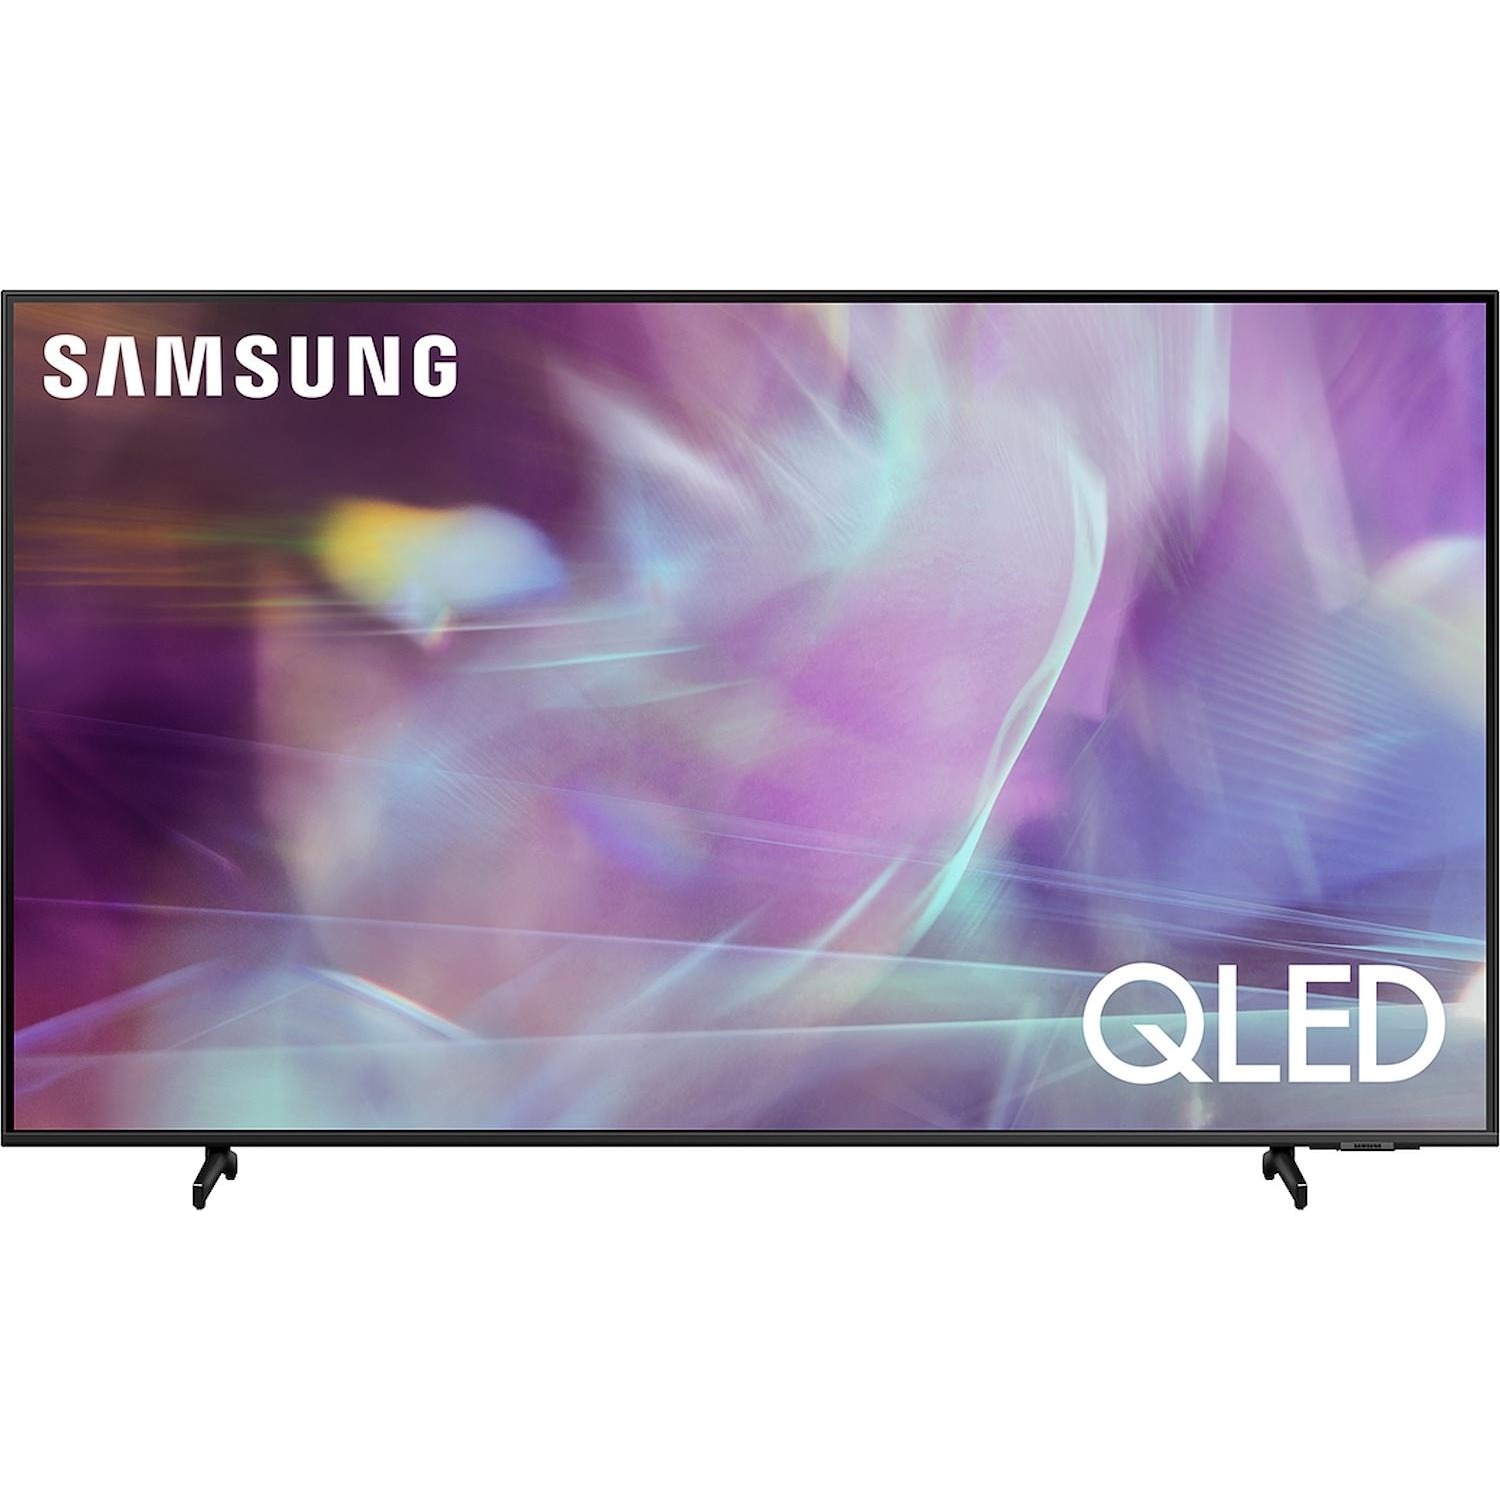 Immagine per TV LED Smart 4K UHD Samsung 55Q60AAU da DIMOStore